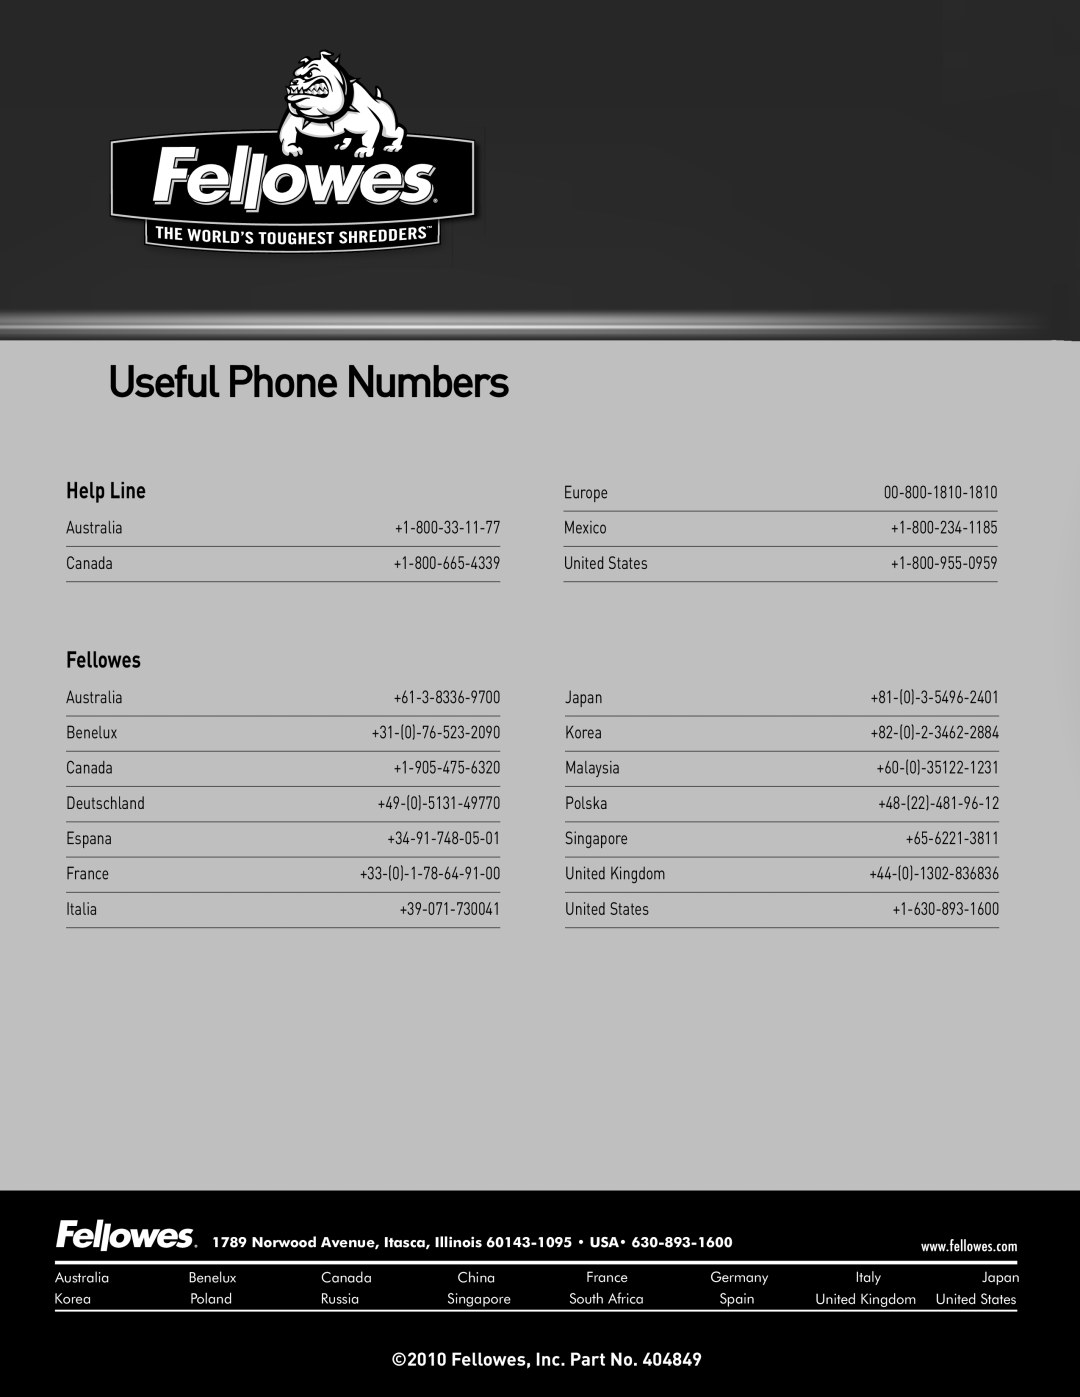 Fellowes SB-83I manual Help Line, Useful Phone Numbers, Fellowes, Inc. Part No 